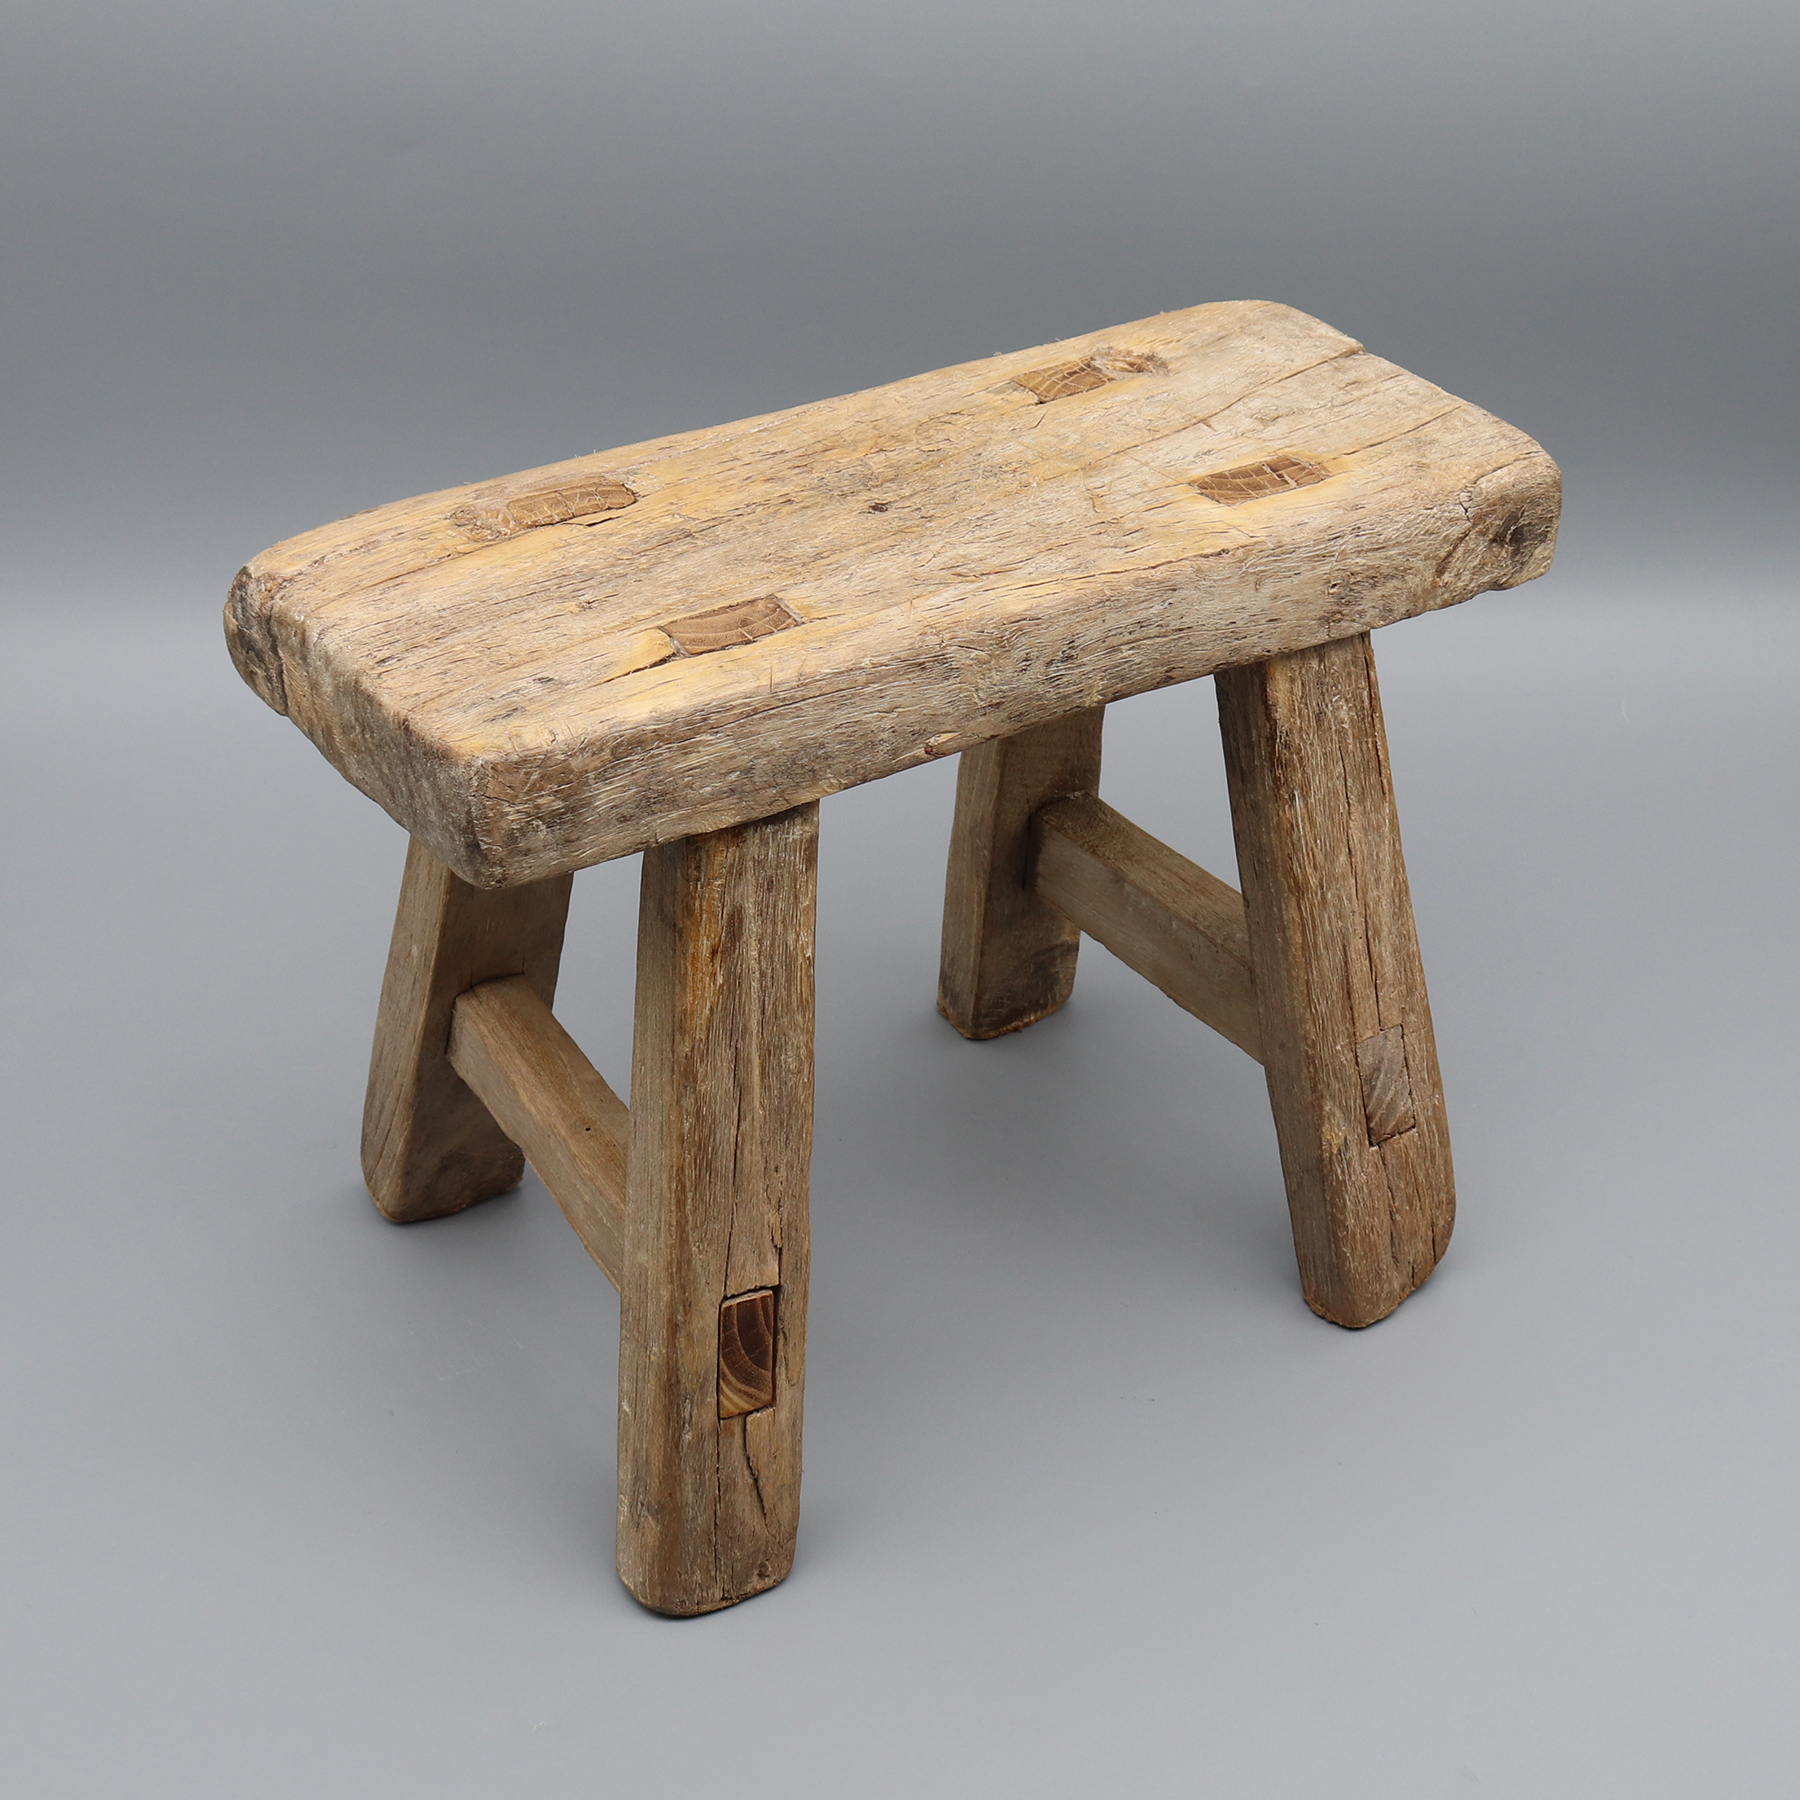 Antieke houten kruk, insteek- en penverbinding, kleine tafel, plantenstandaard, massief hout